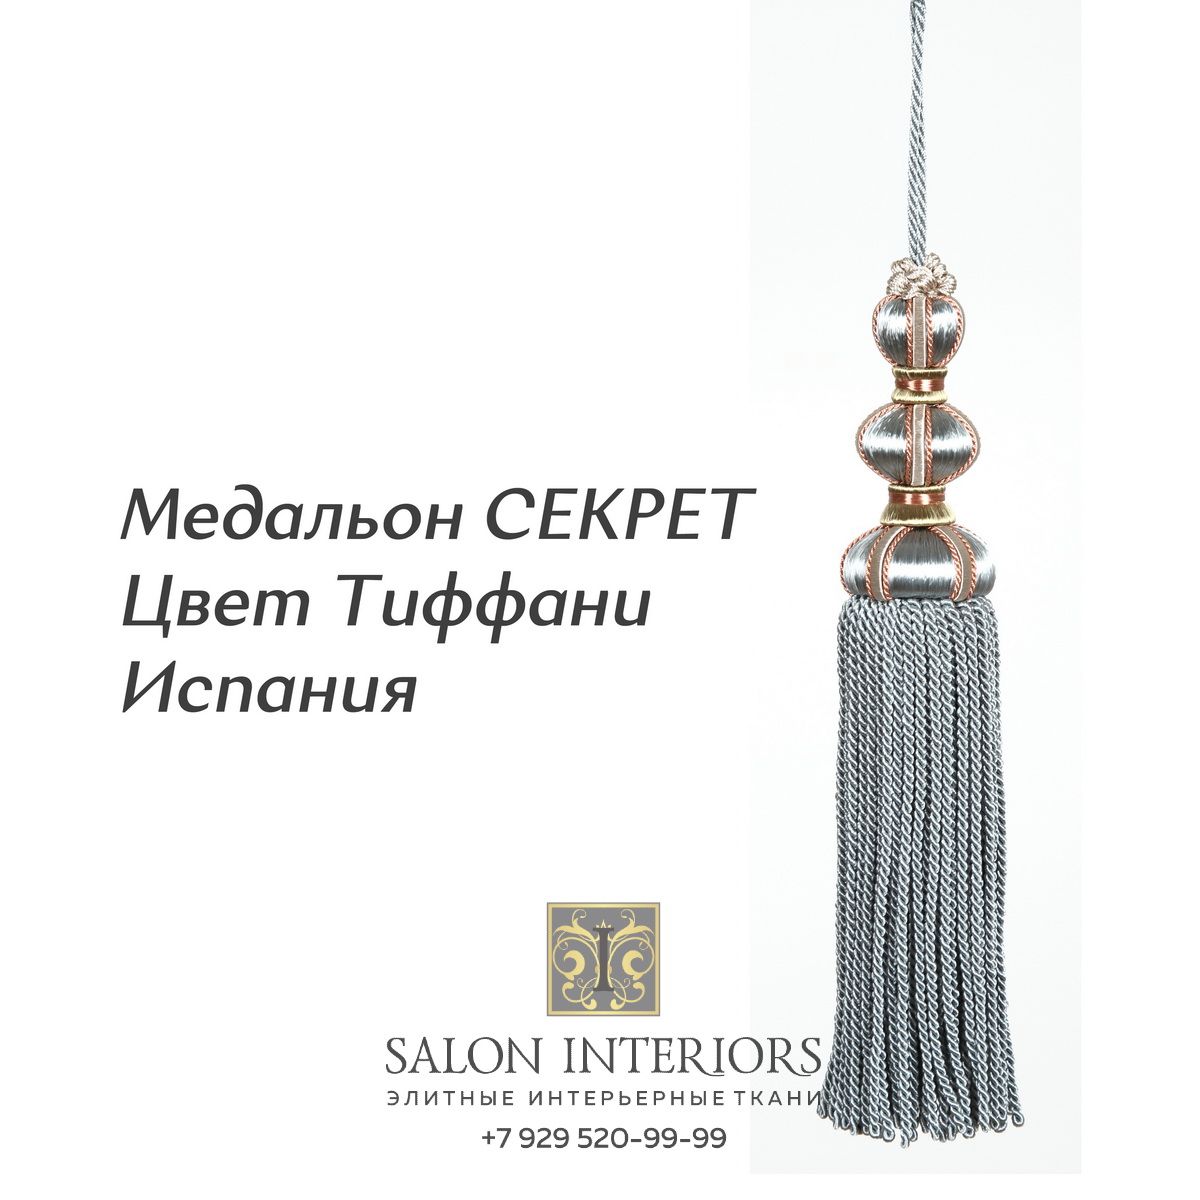 Медальон "СЕКРЕТ" Арт MK996A-0932 Цвет Тиффани разм.27см Испания